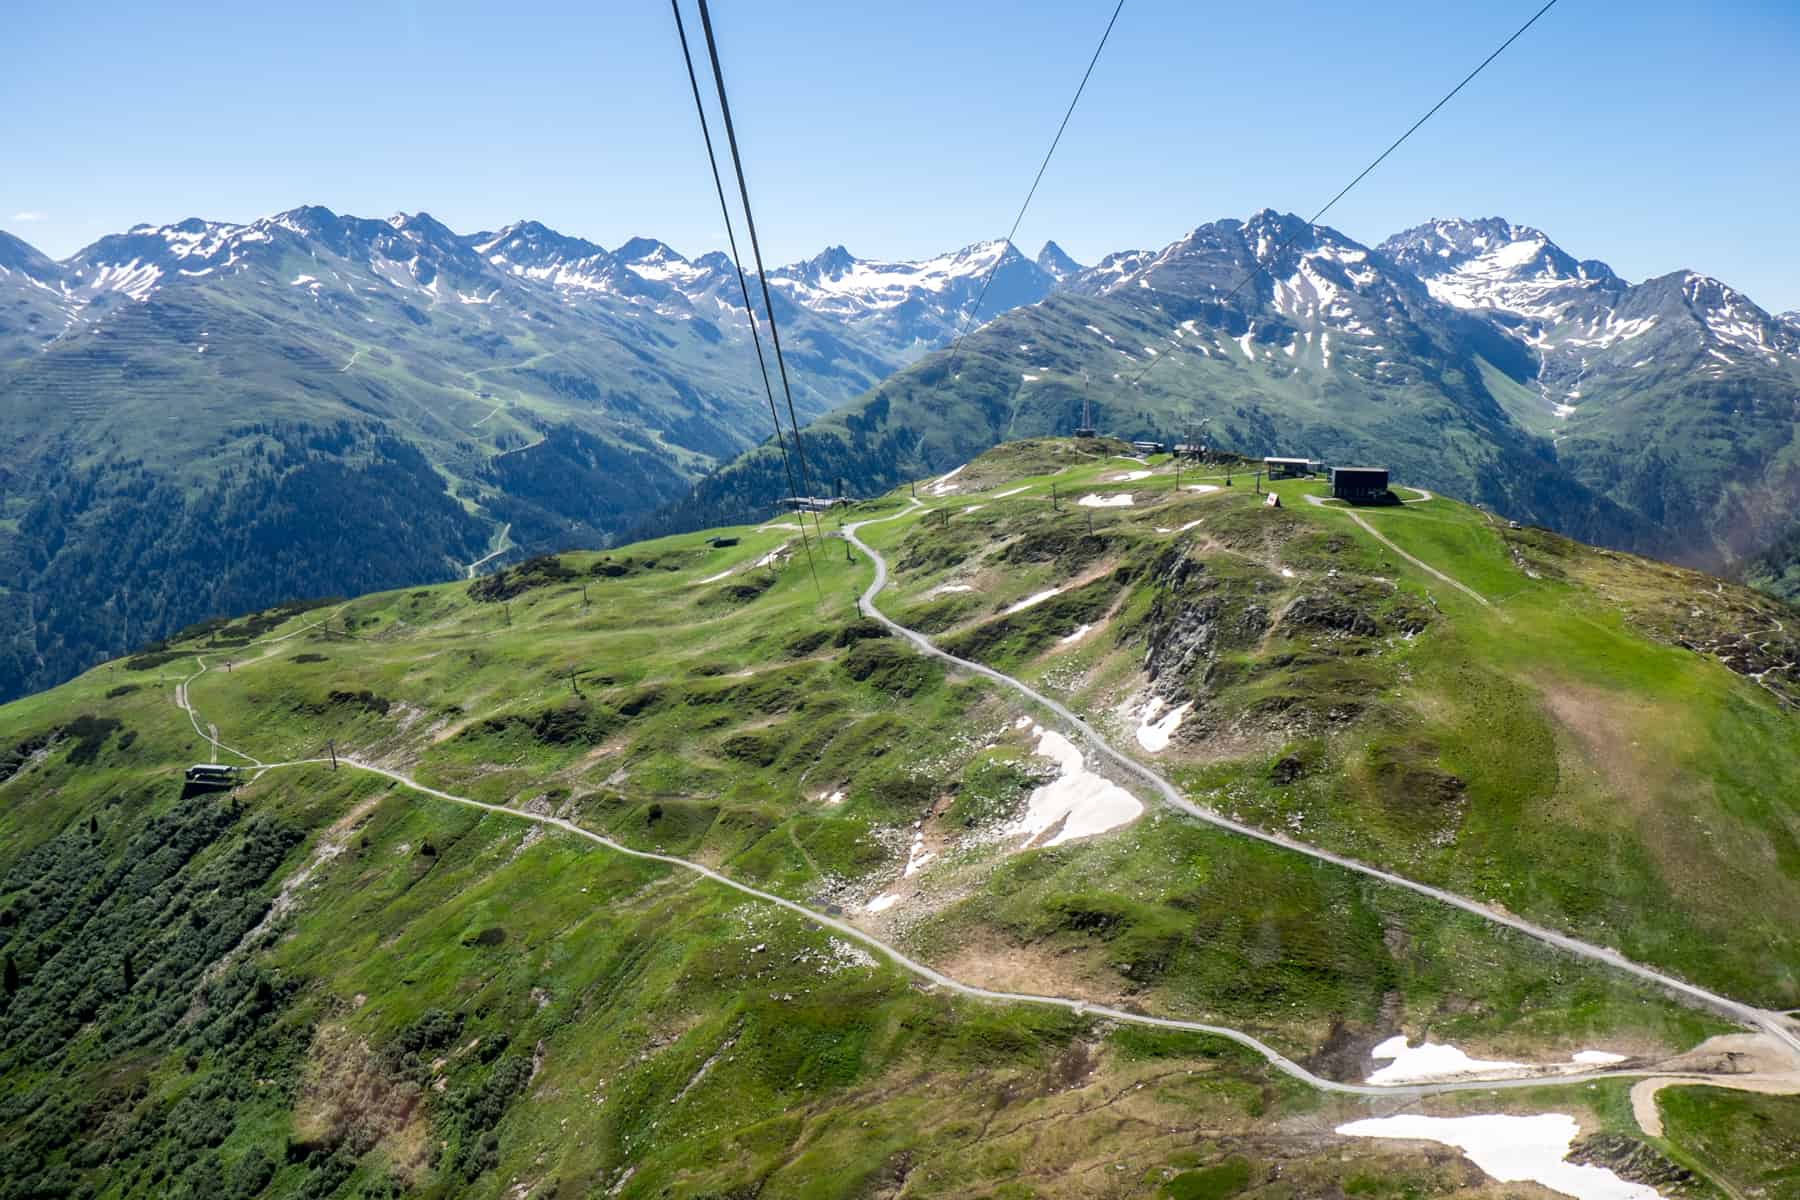 A series of hiking trails winds around a green mountain peak - the Mutspuren Circular Hiking Trail in St. Anton